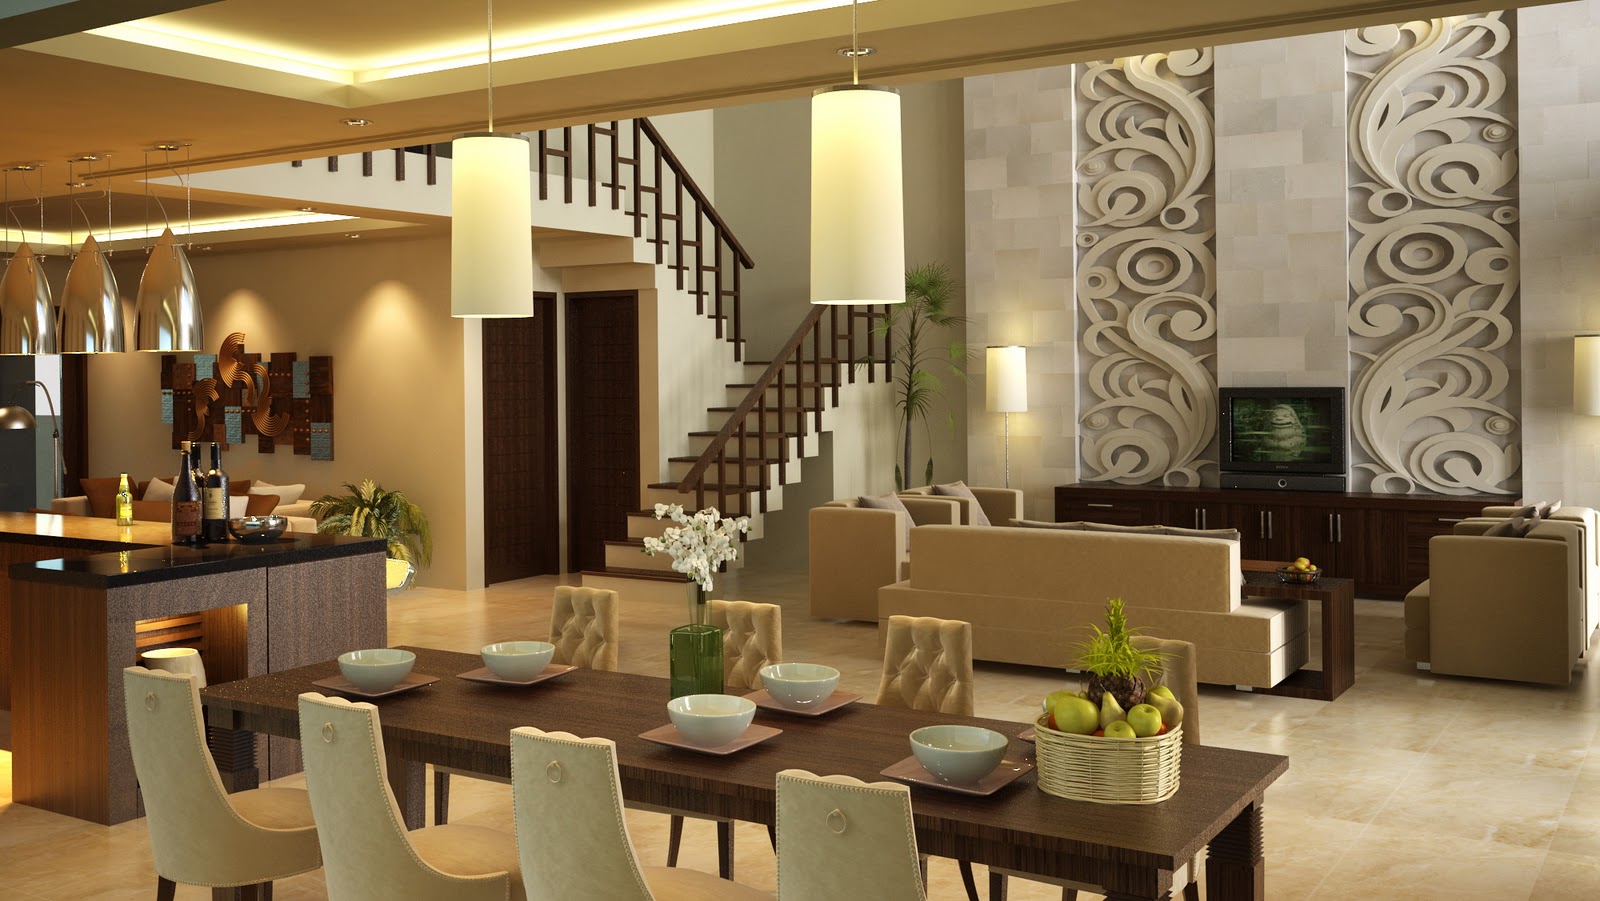  desain interior rumah arab minimalis type 21 